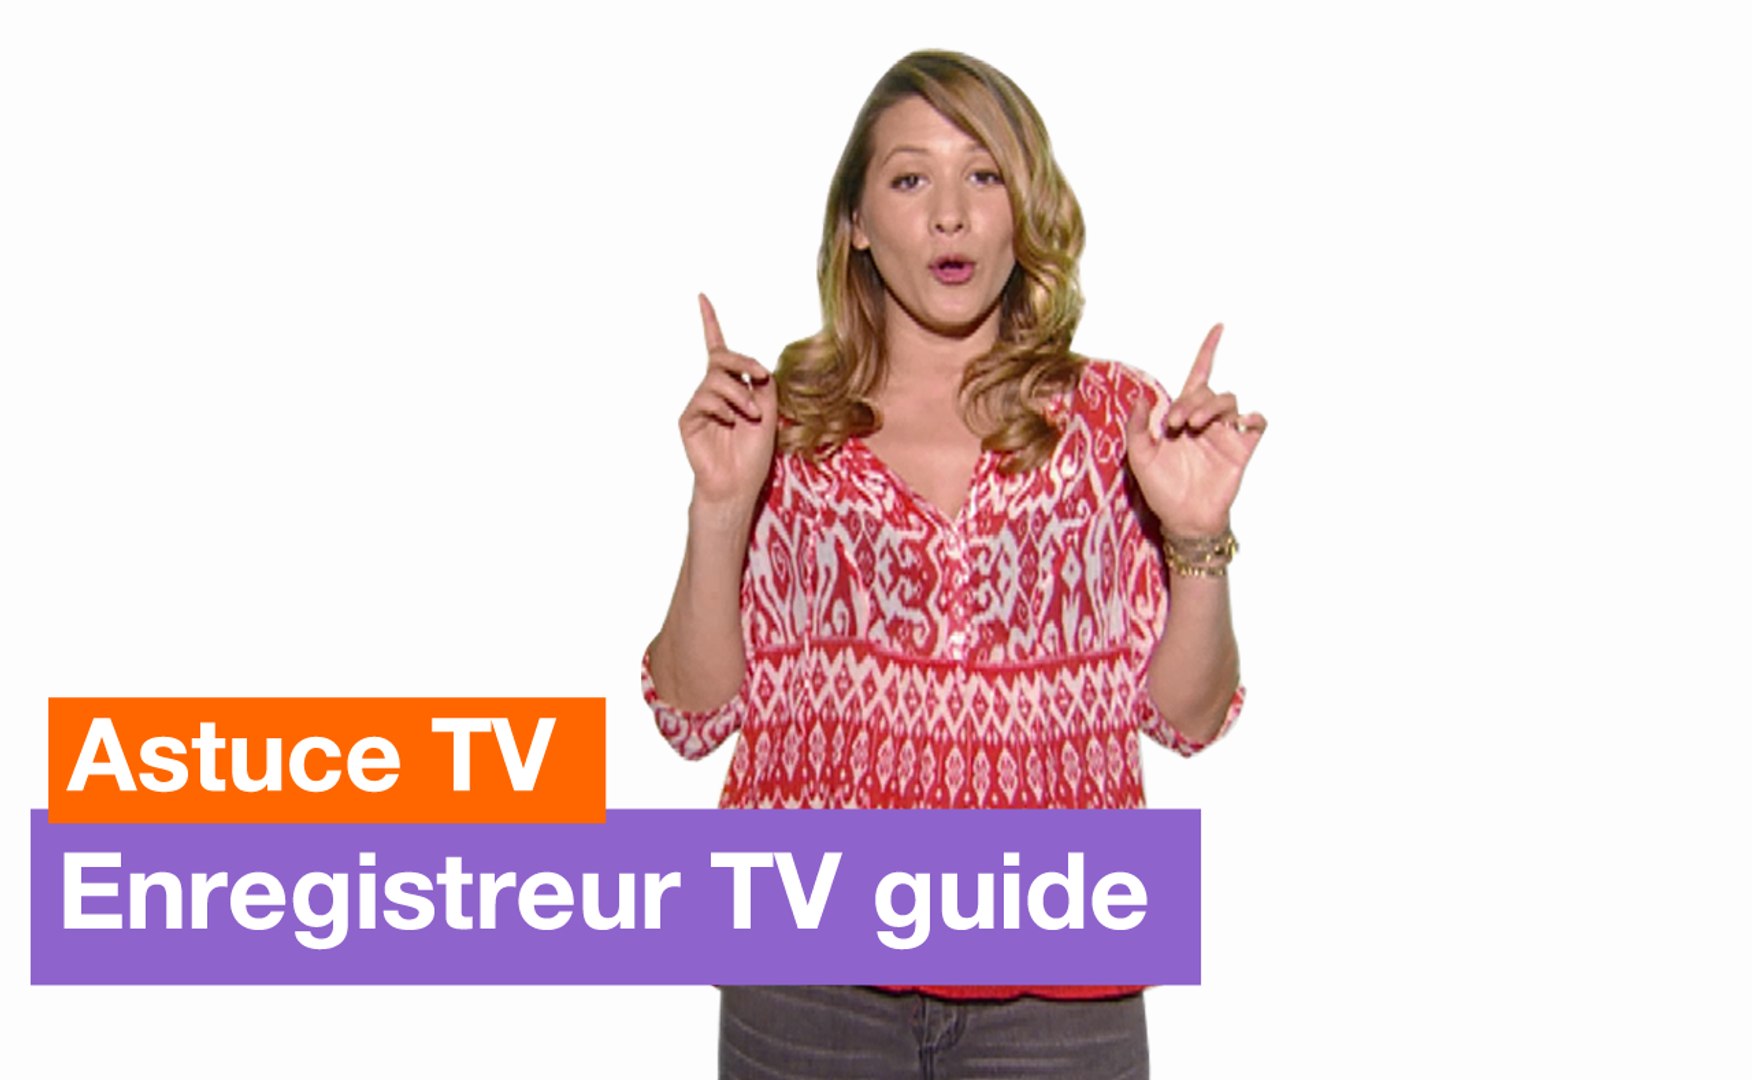 Astuce TV - Enregistreur TV guide - Orange - Vidéo Dailymotion